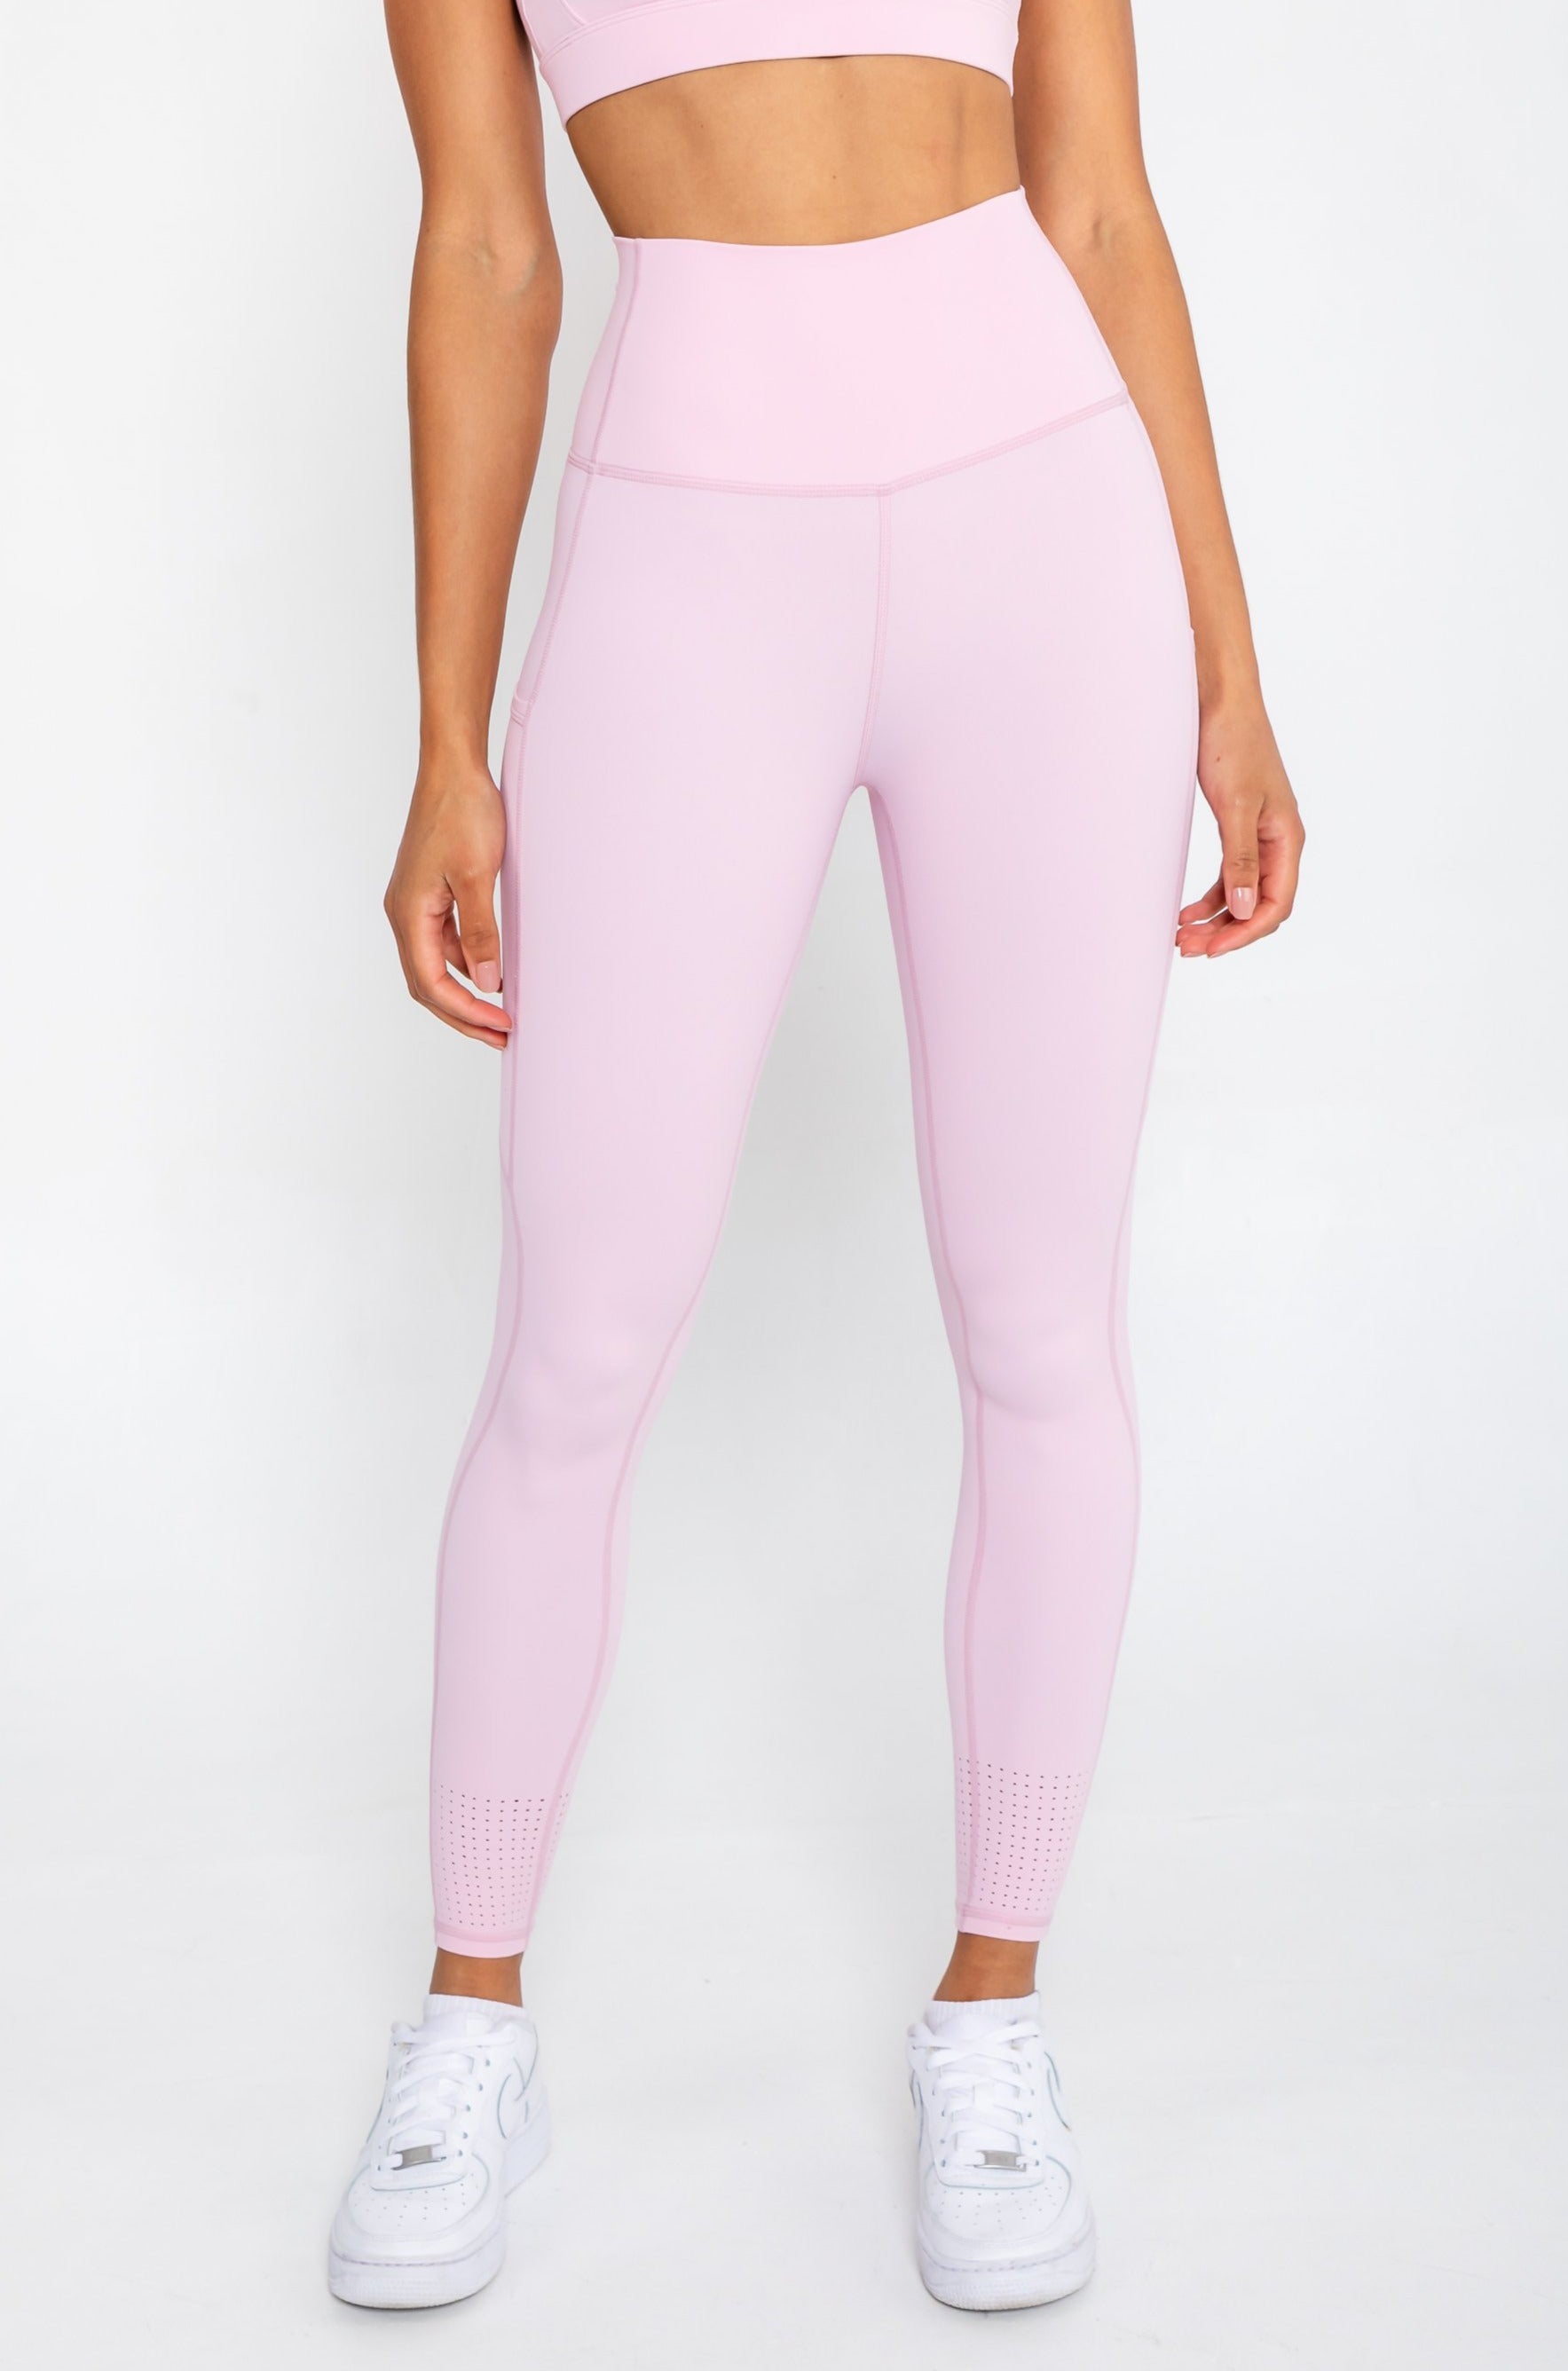 Inspire Leggings - Pink Ombre | MT SPORT – Maven Thread